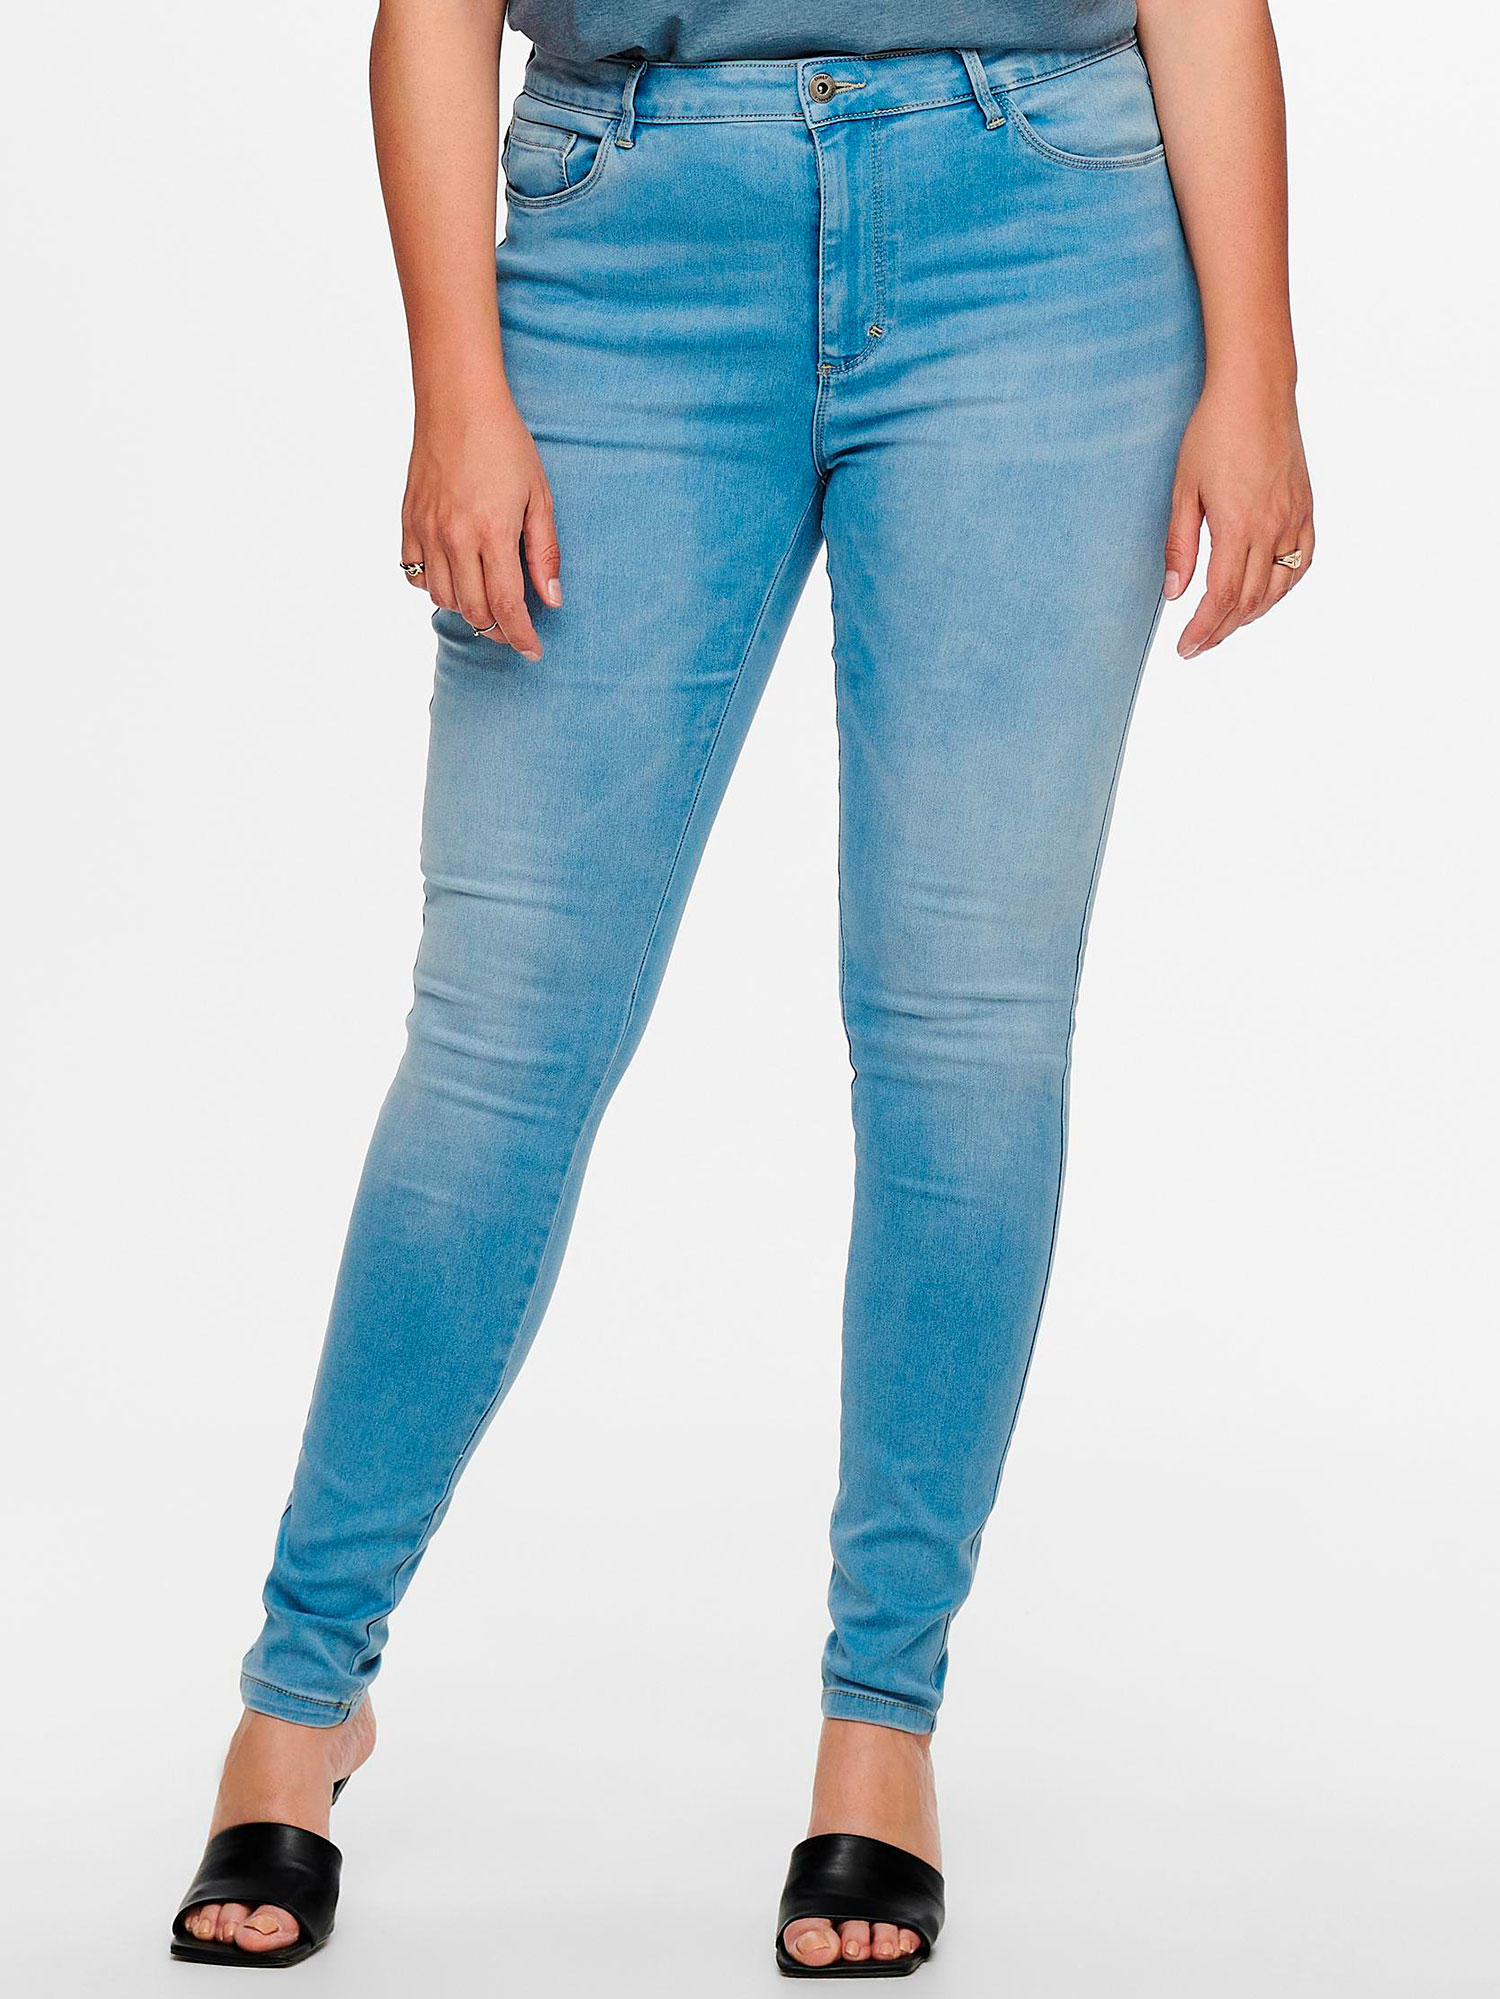 AUGUSTA - Lyseblå jeans med benlengde 34 fra Only Carmakoma